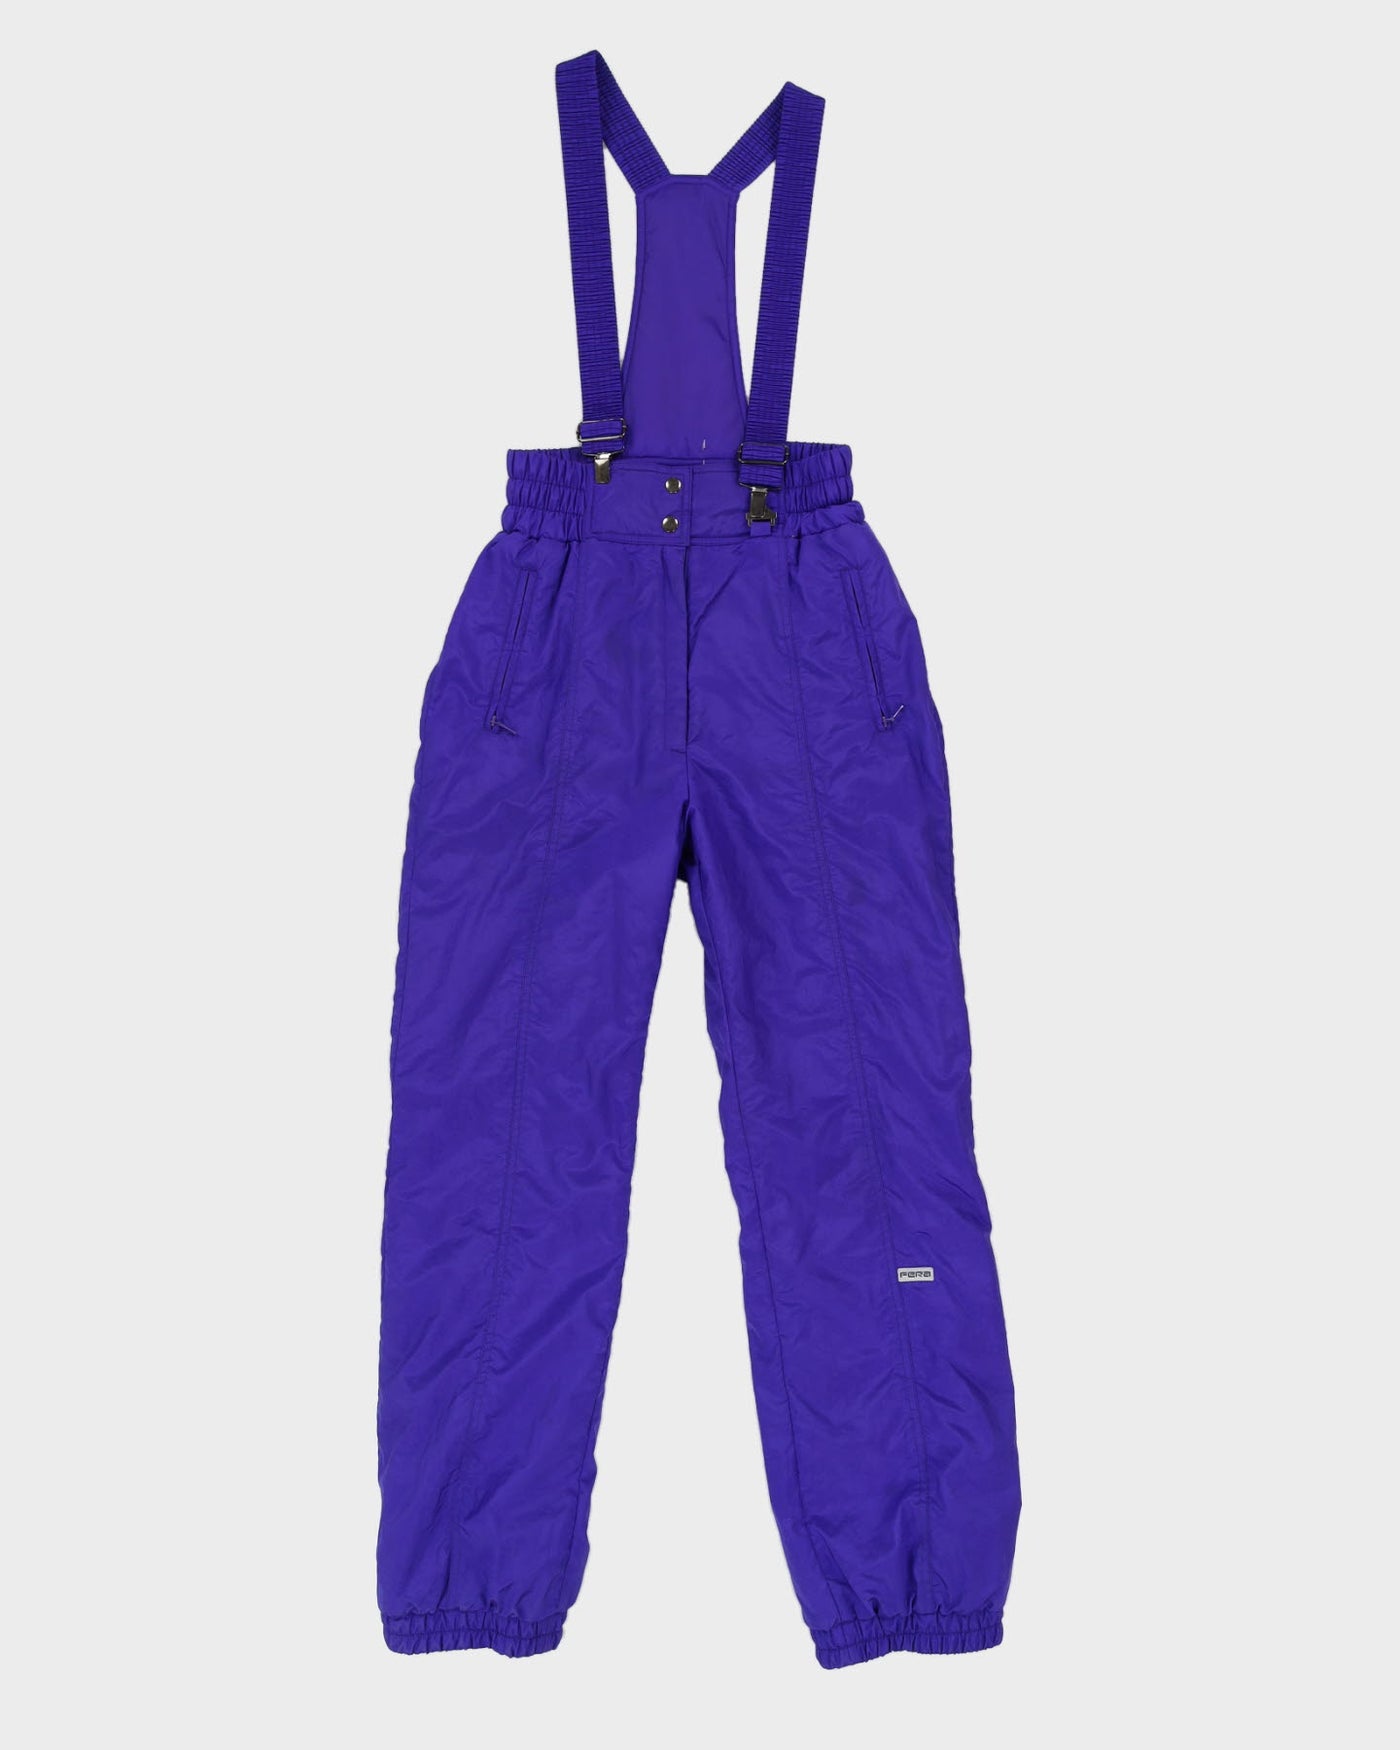 Vintage 80s Fera SkiWear Purple Ski Salopettes - S